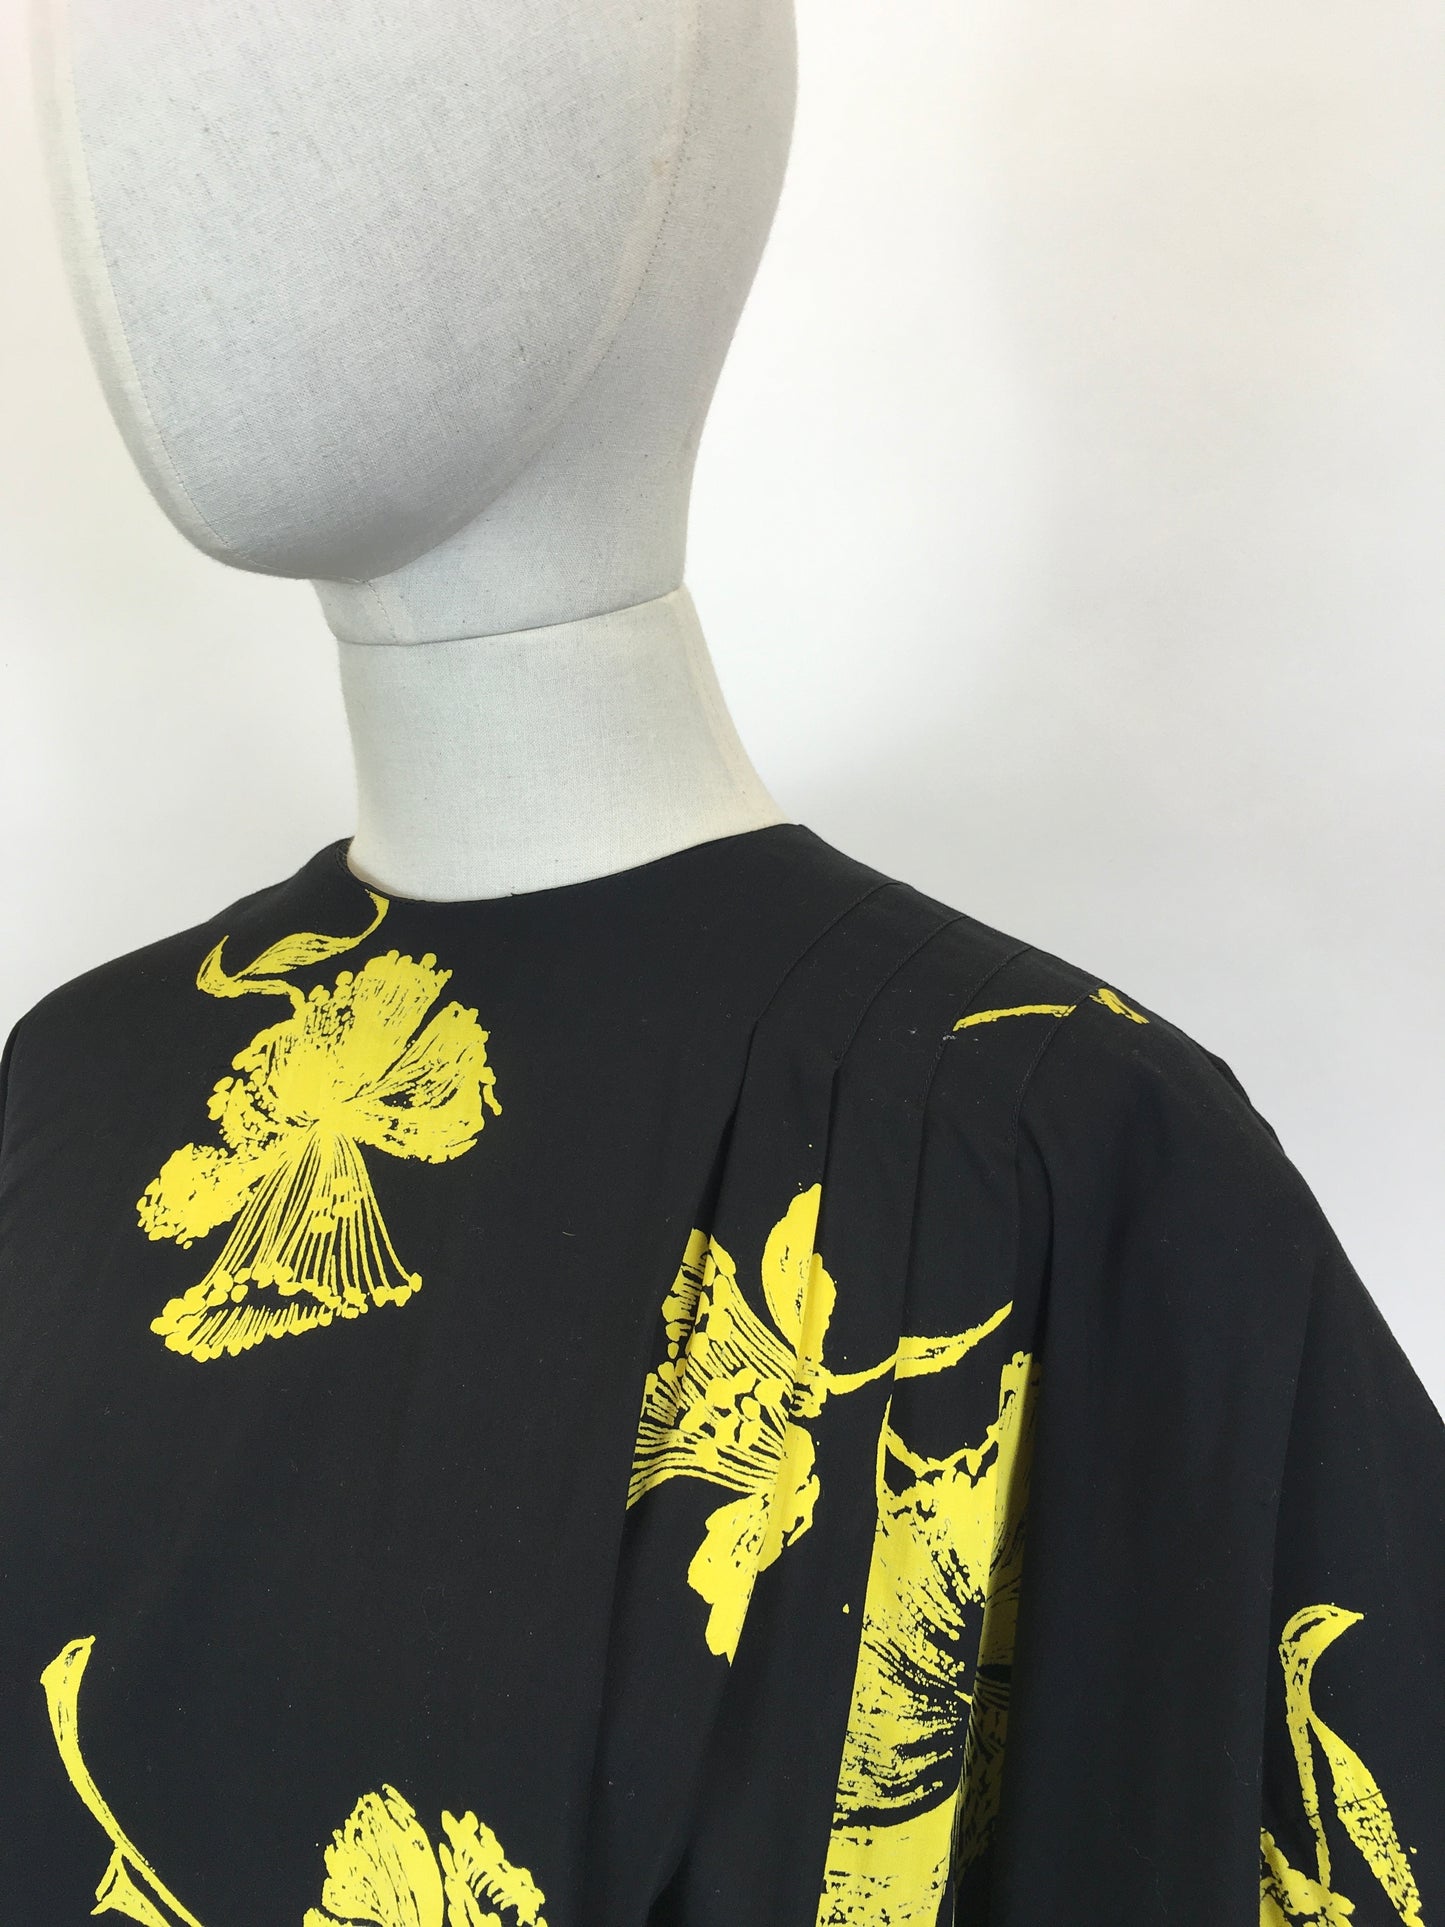 Original 1940’s Sensational Black & Yellow Dress by ‘ Paul Sachs ‘ - With Stunning Hip Swag & Peplum Details